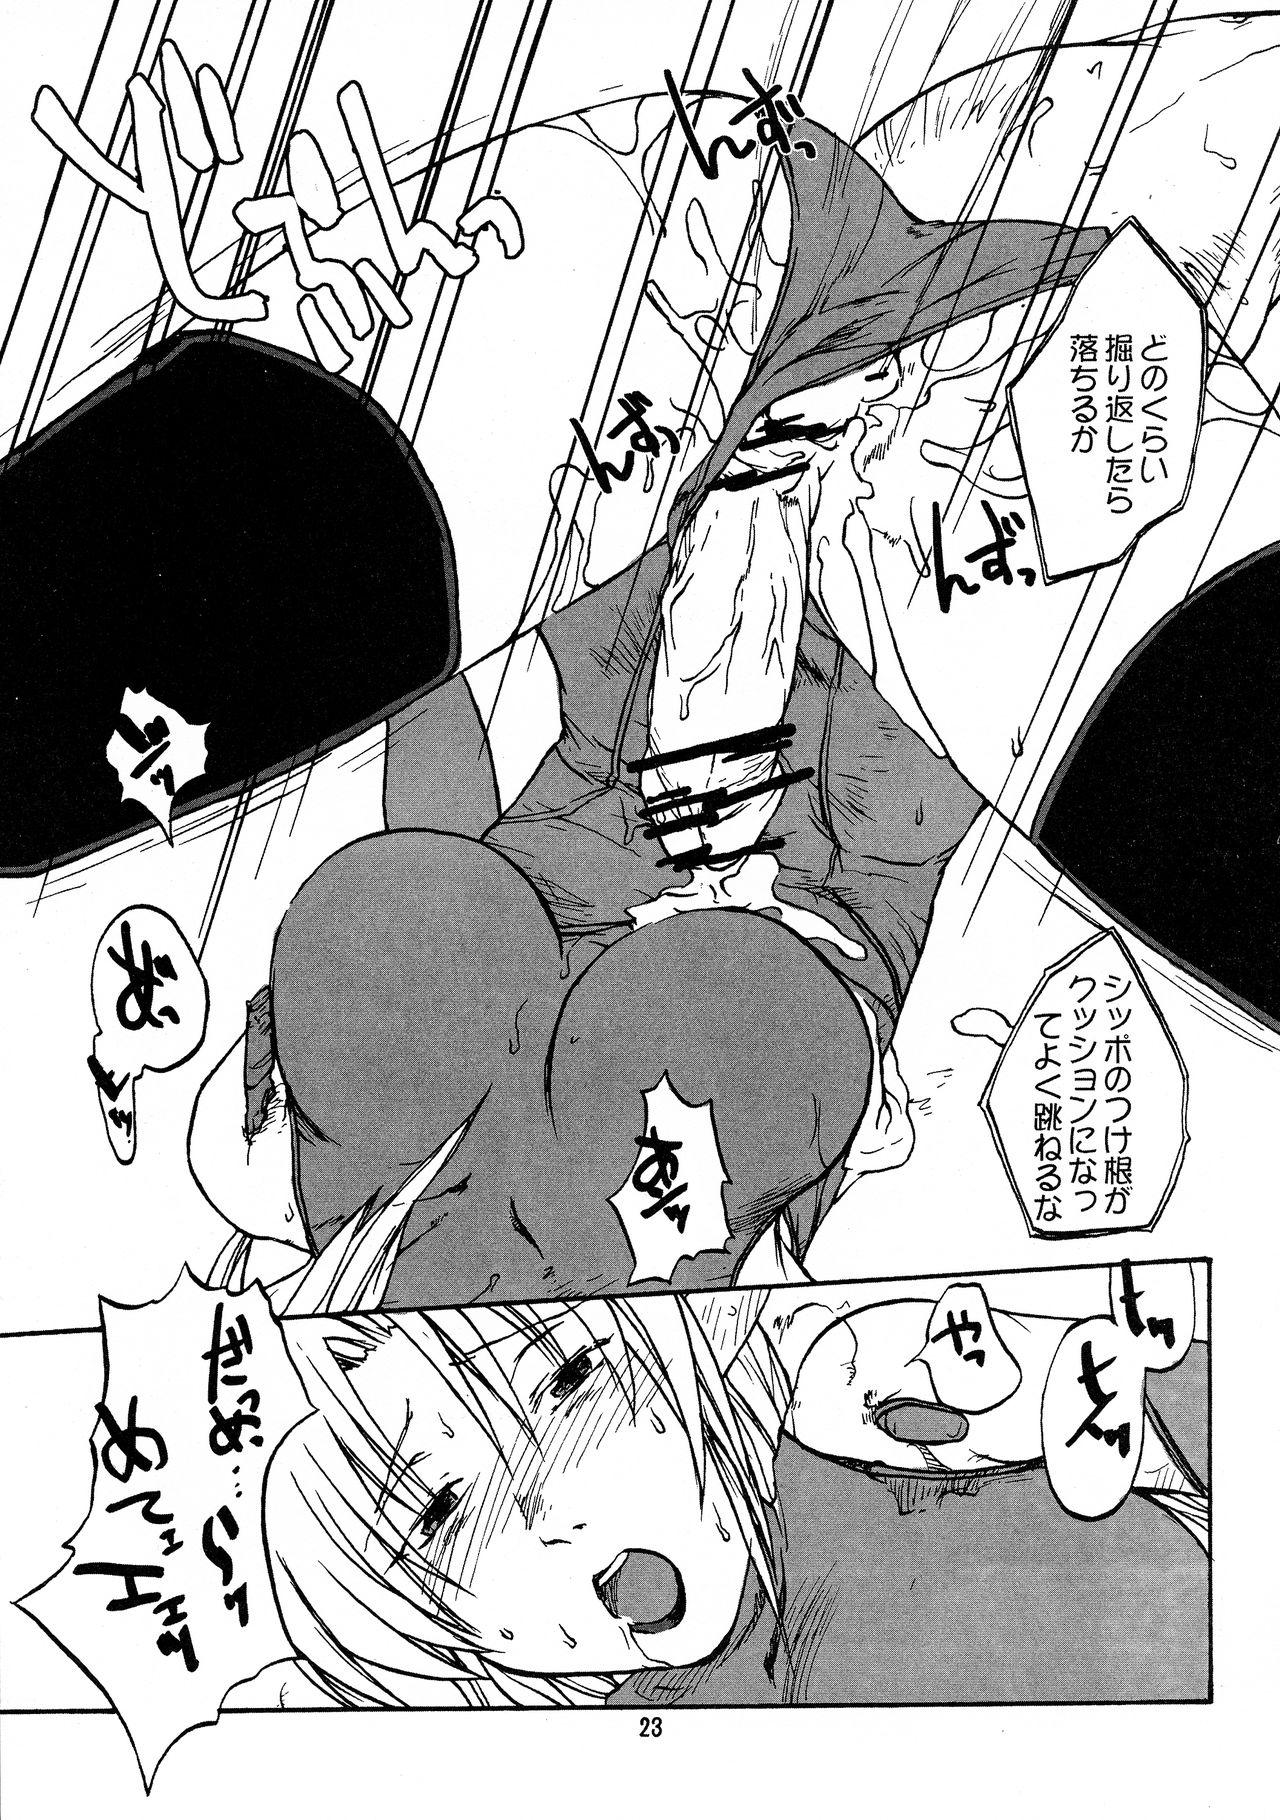 Manga Chocolate Bustier vol. 2 22